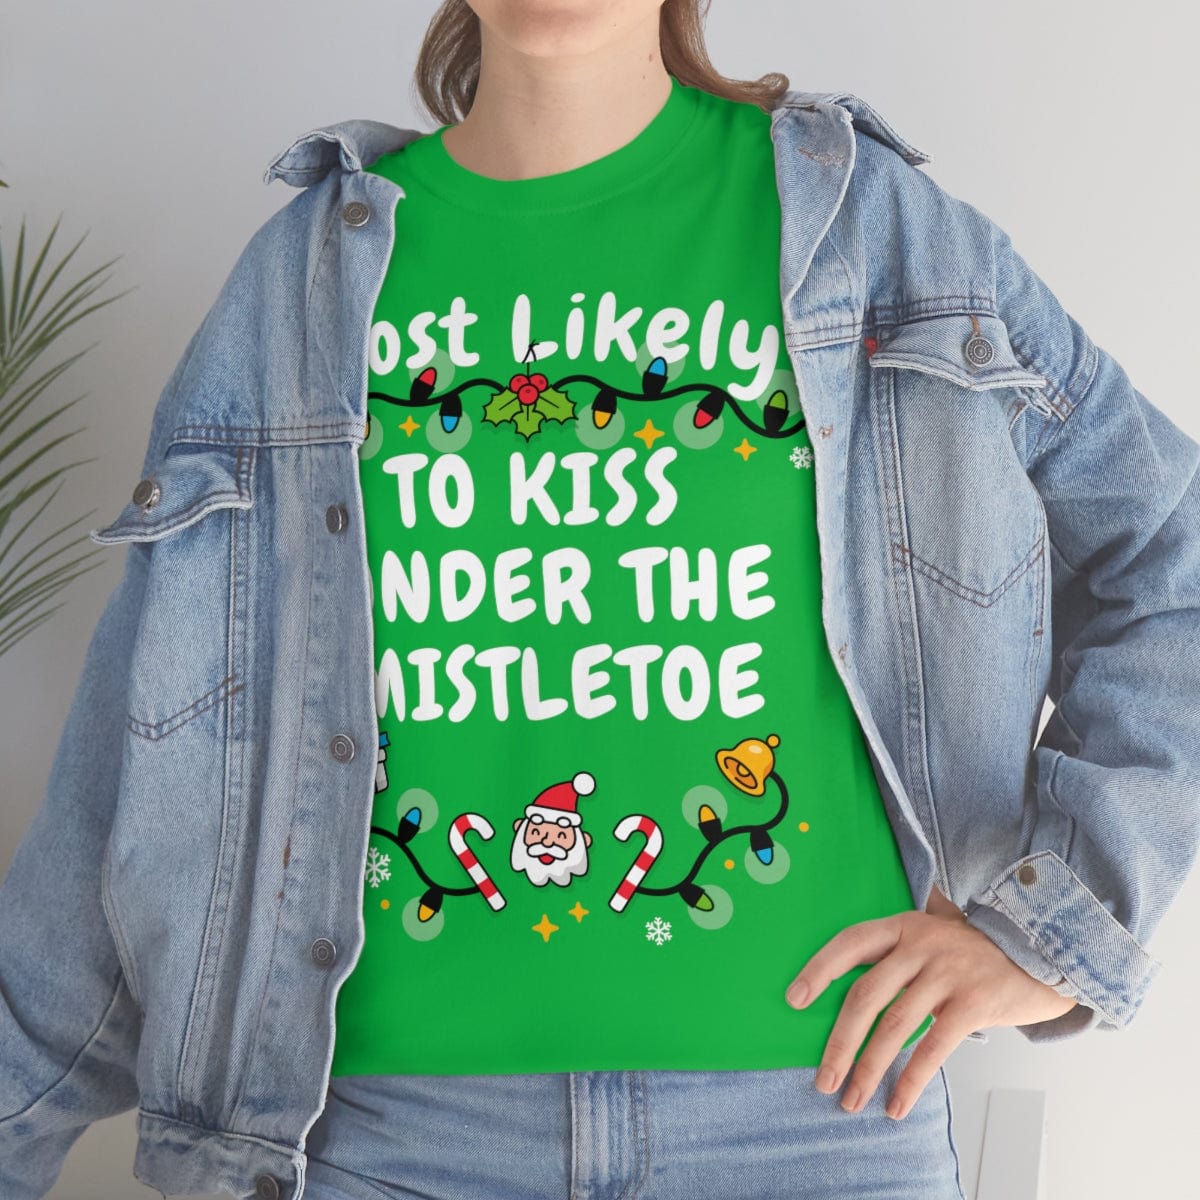 TO KISS UNDER THE MISTLETOE